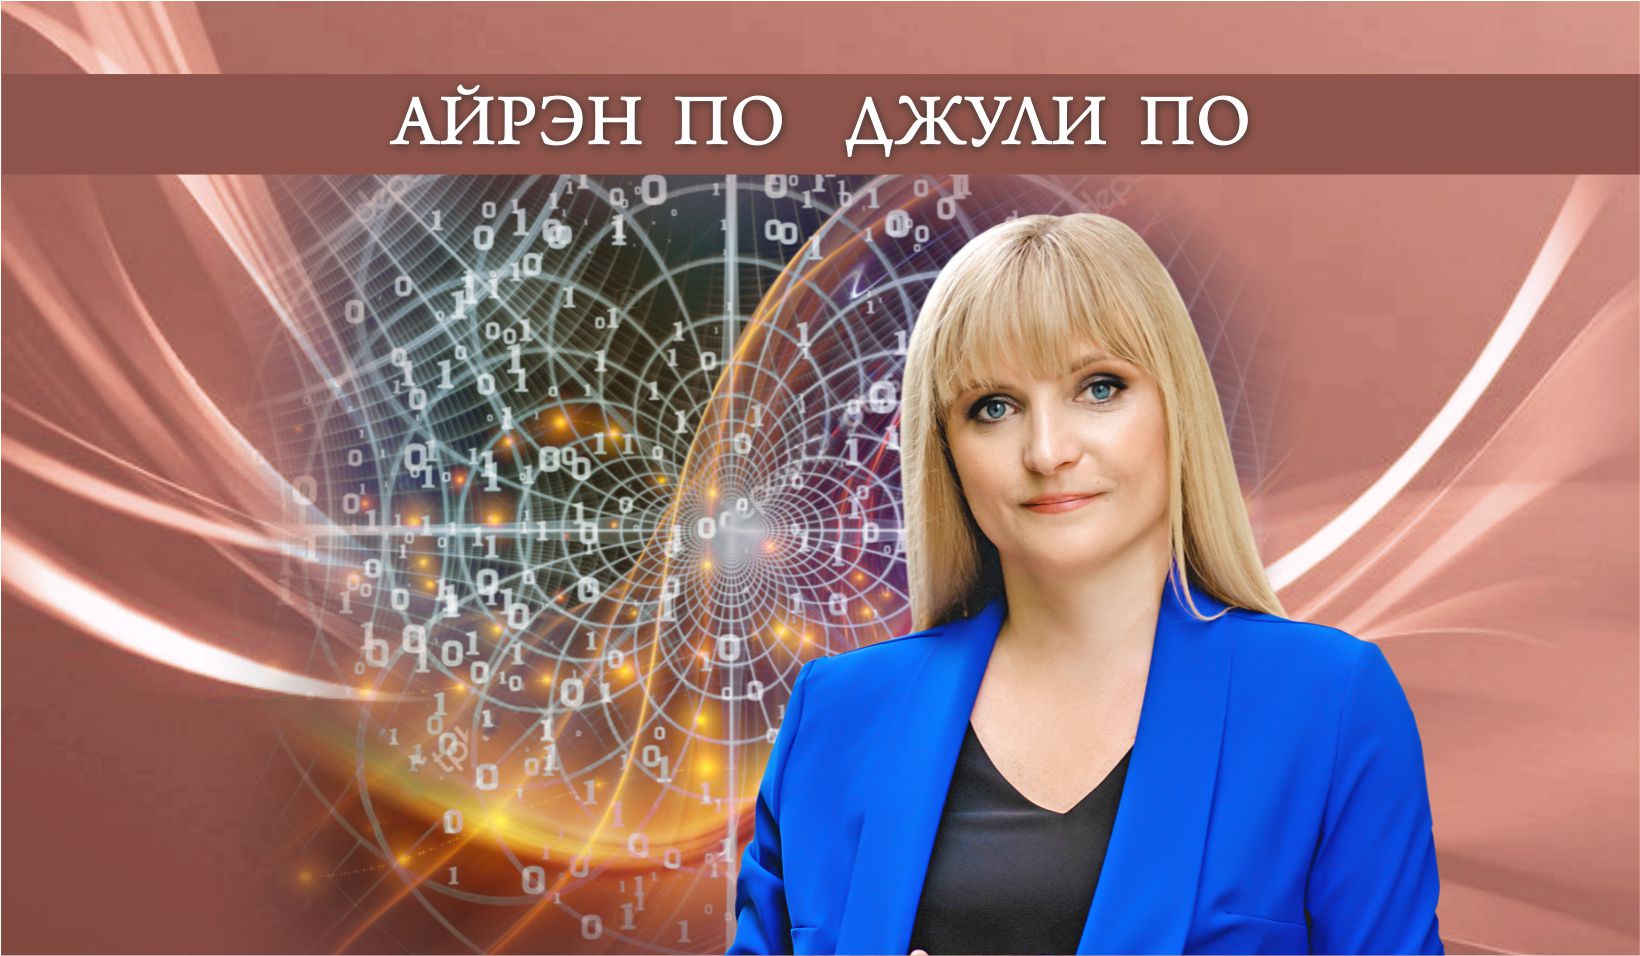 Сайт альвасар купить книги. Альвасар. Джули по. HR - нумерология Альвасар. Джули по о Крыме.